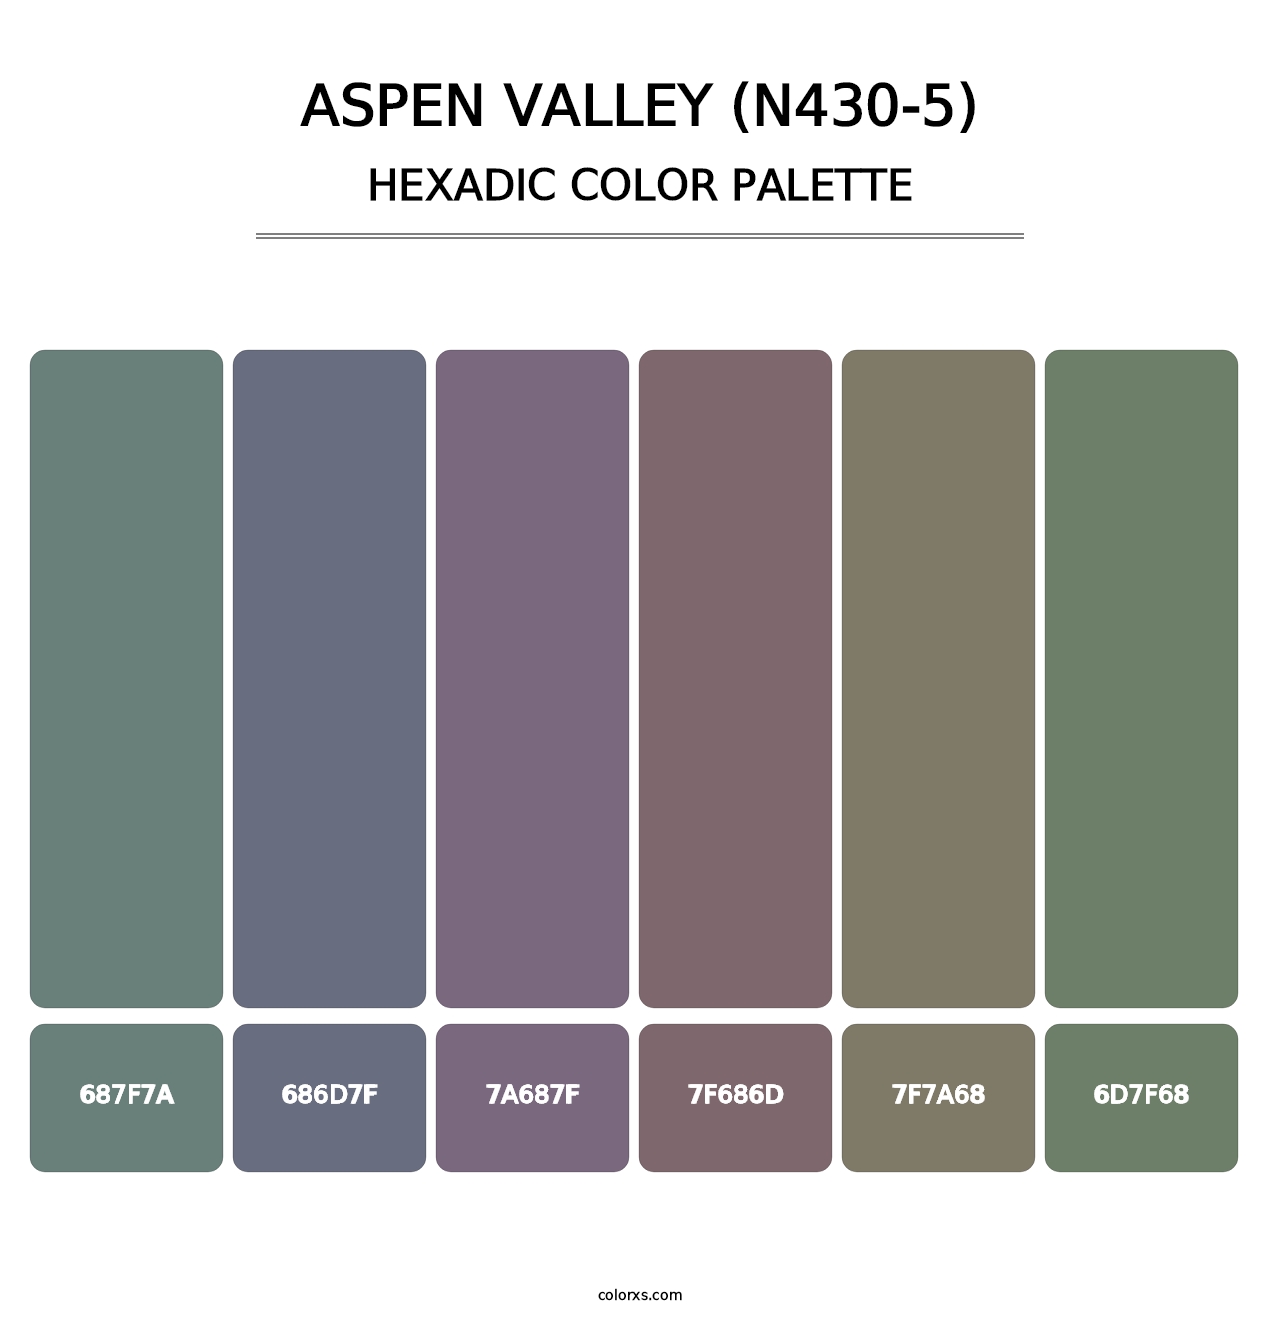 Aspen Valley (N430-5) - Hexadic Color Palette